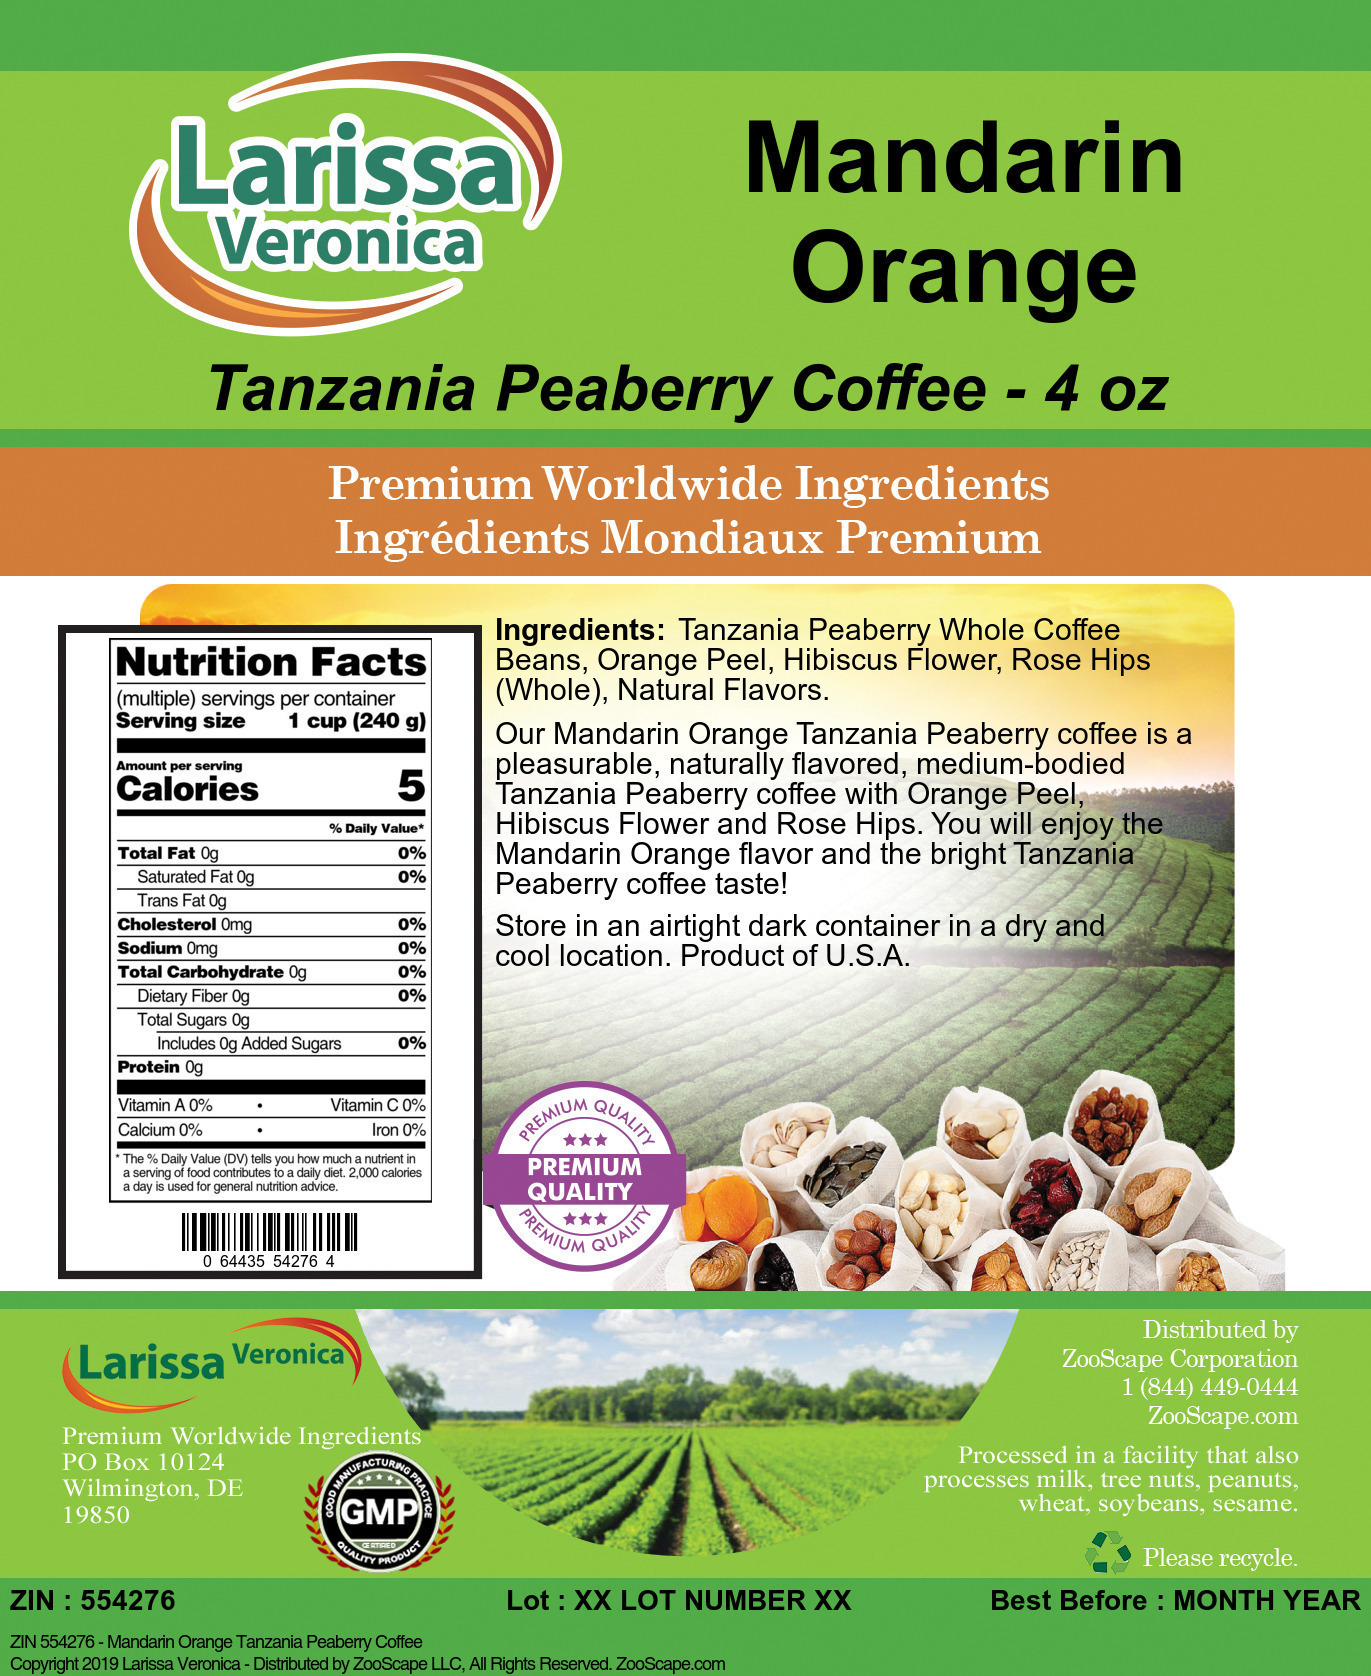 Mandarin Orange Tanzania Peaberry Coffee - Label